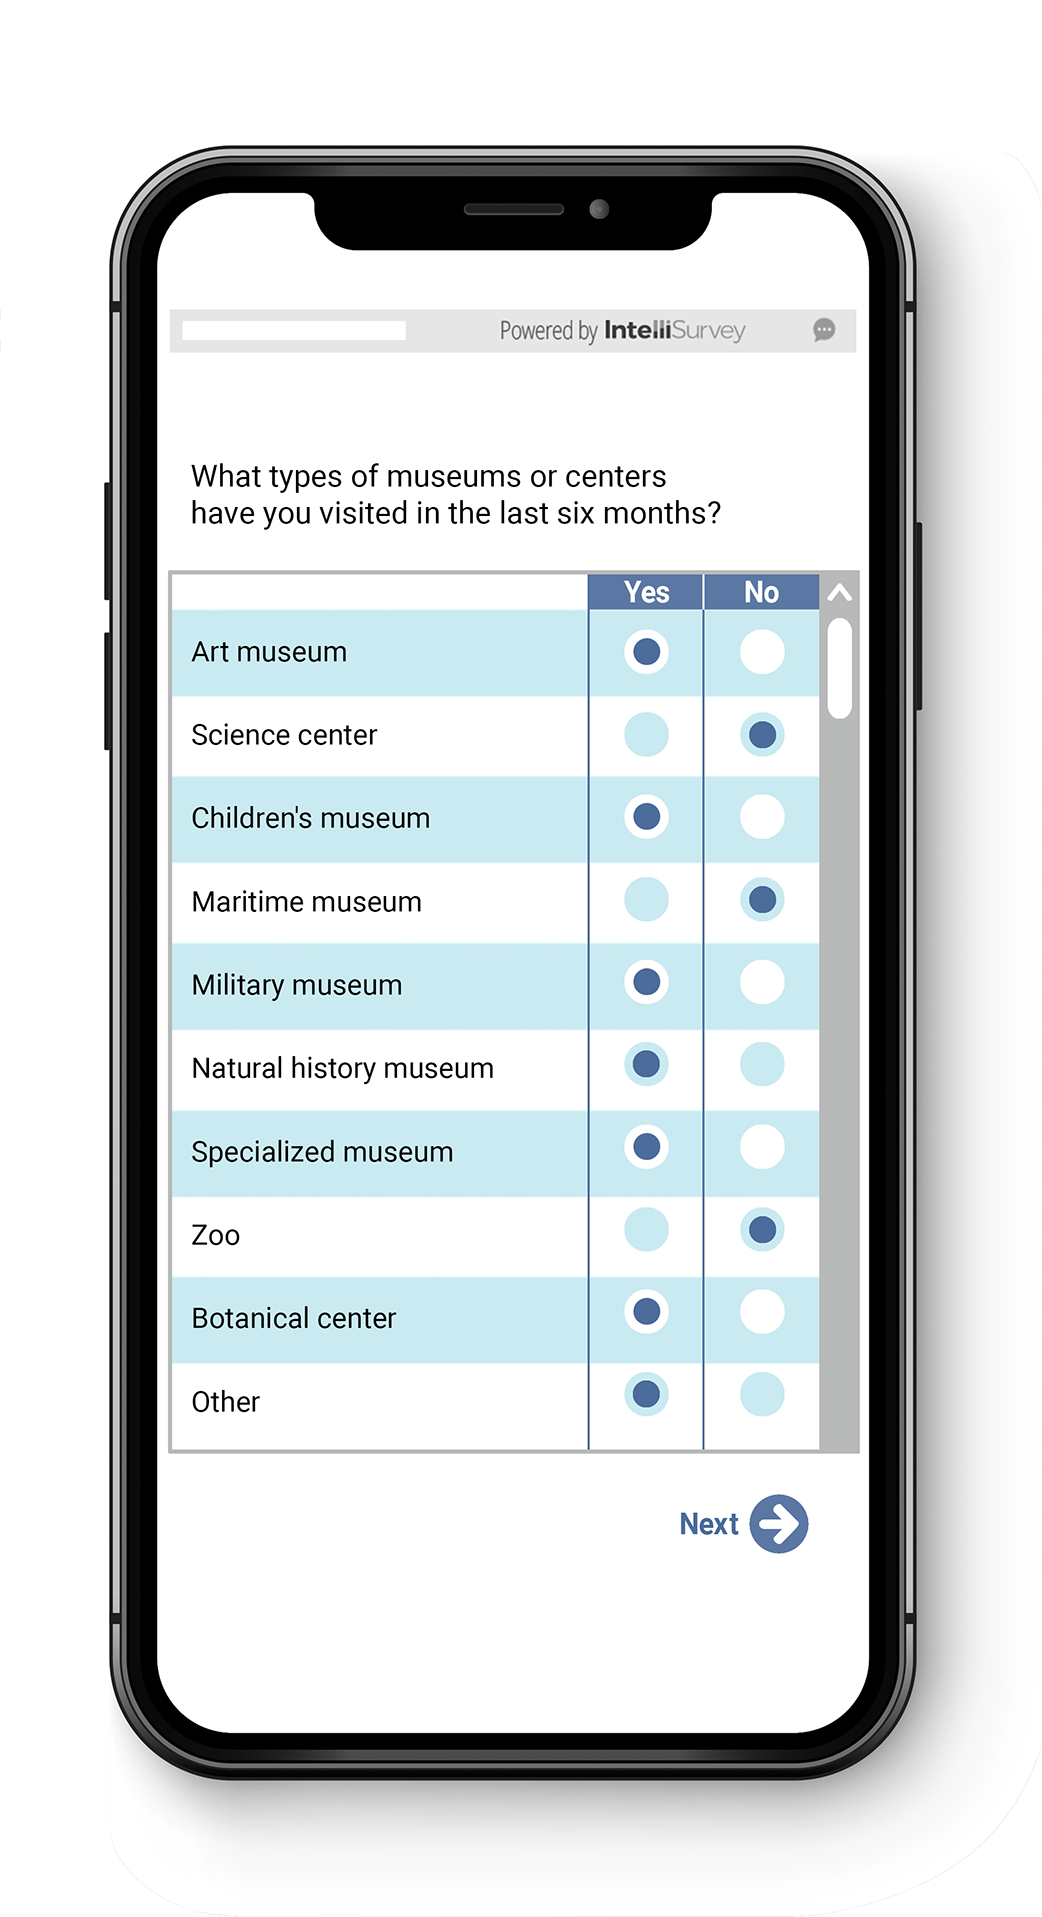 Mobile-friendly survey